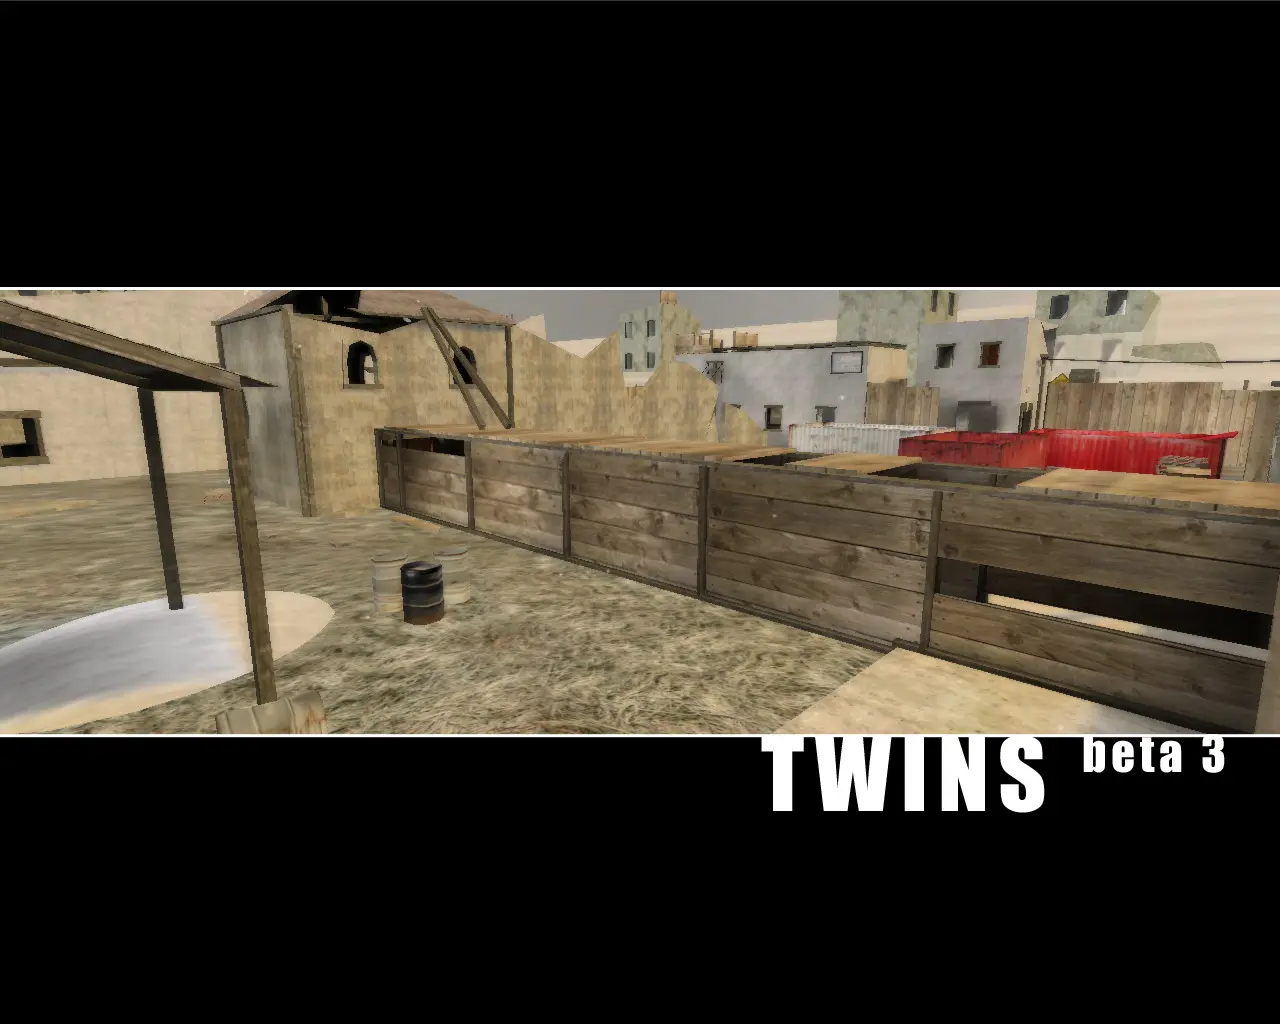 ut4_twins_beta3